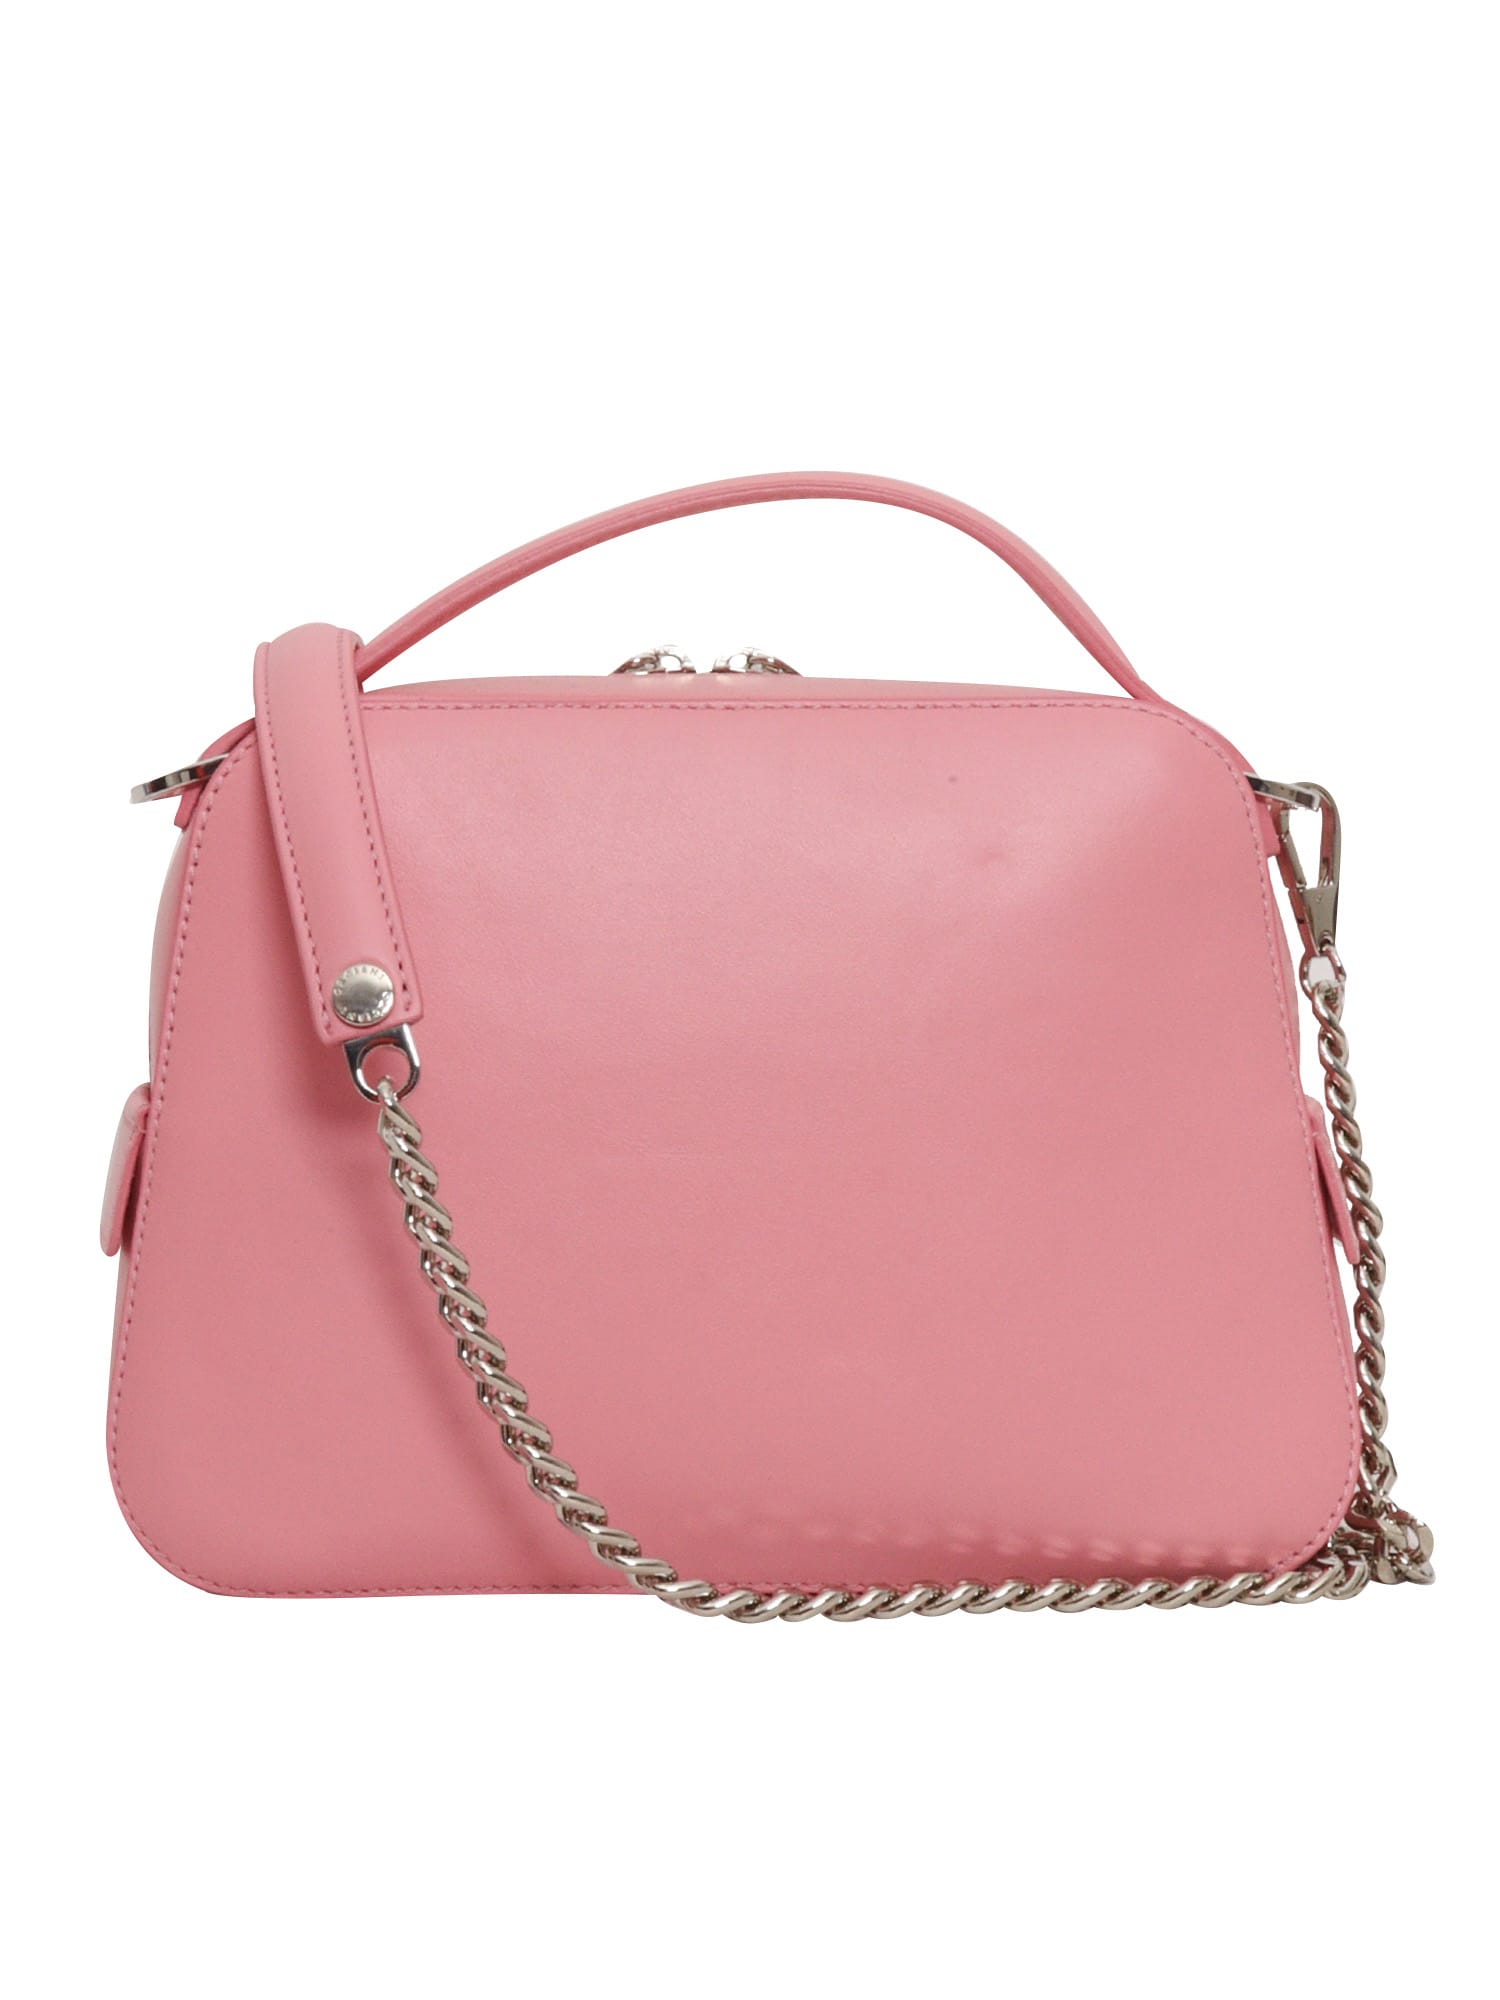 Shop Orciani Pink Handbag